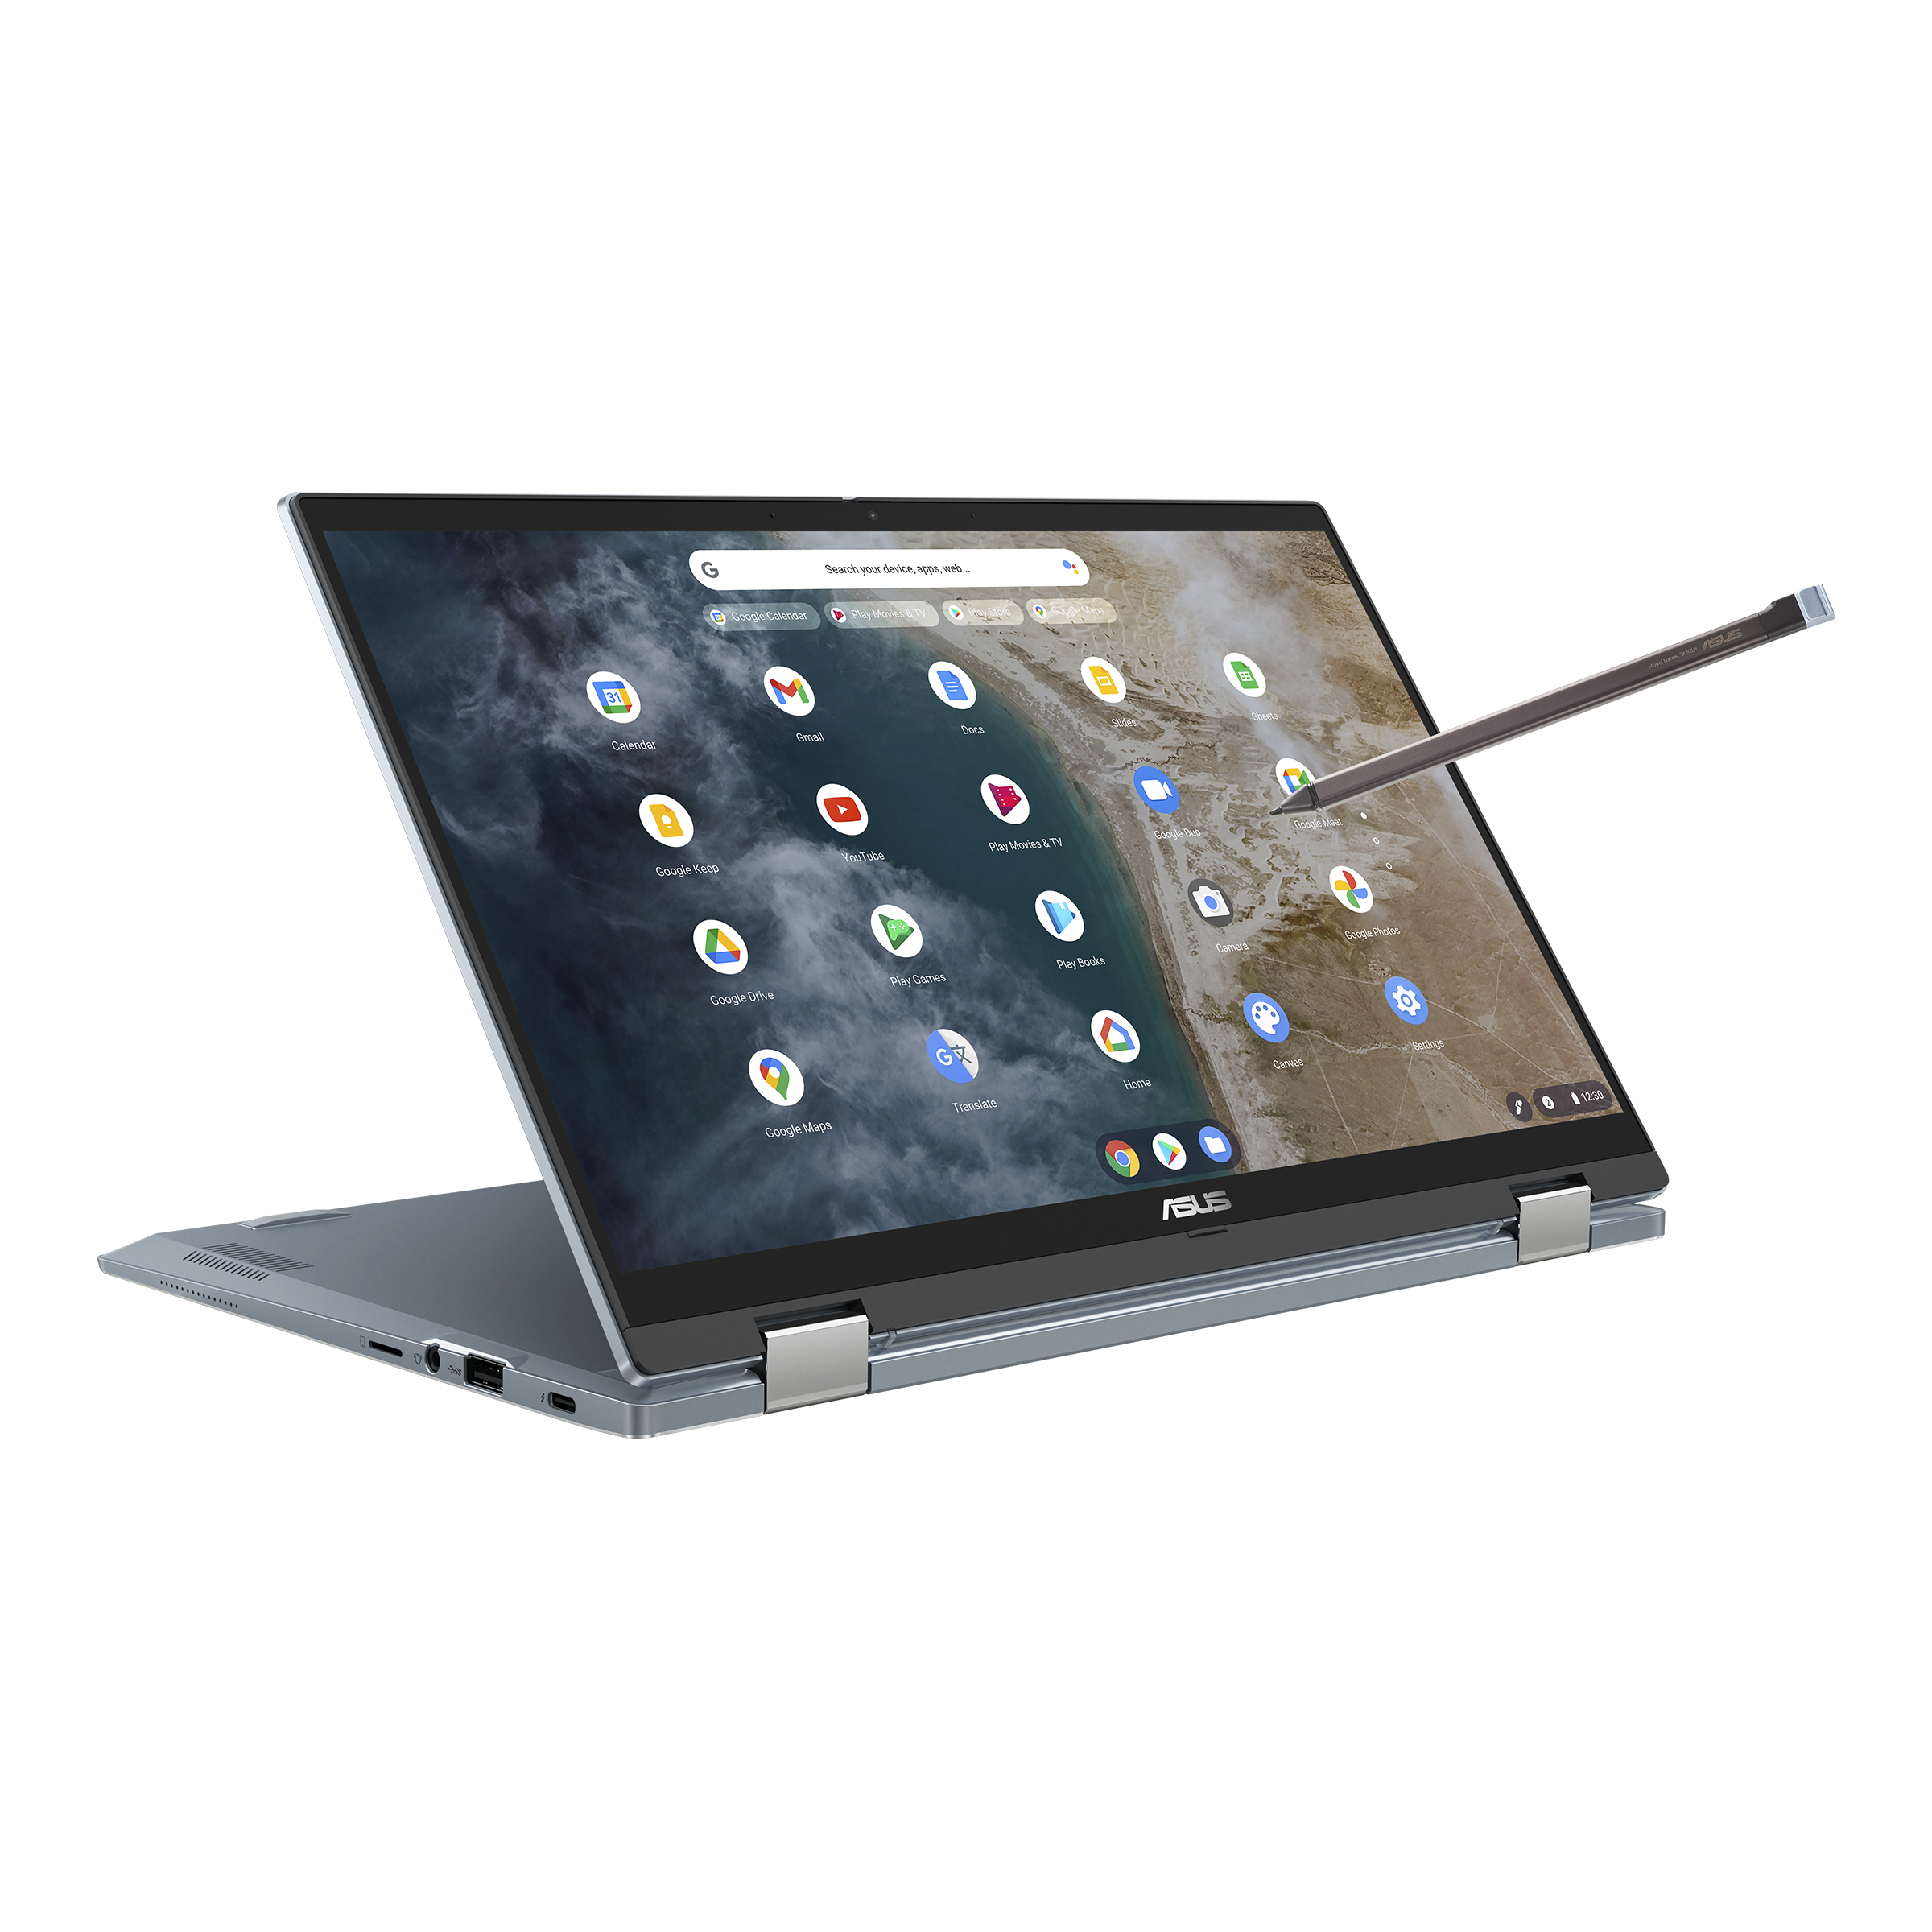 ASUS Chromebook Flip CX5 (CX5400, 11th Gen Intel)